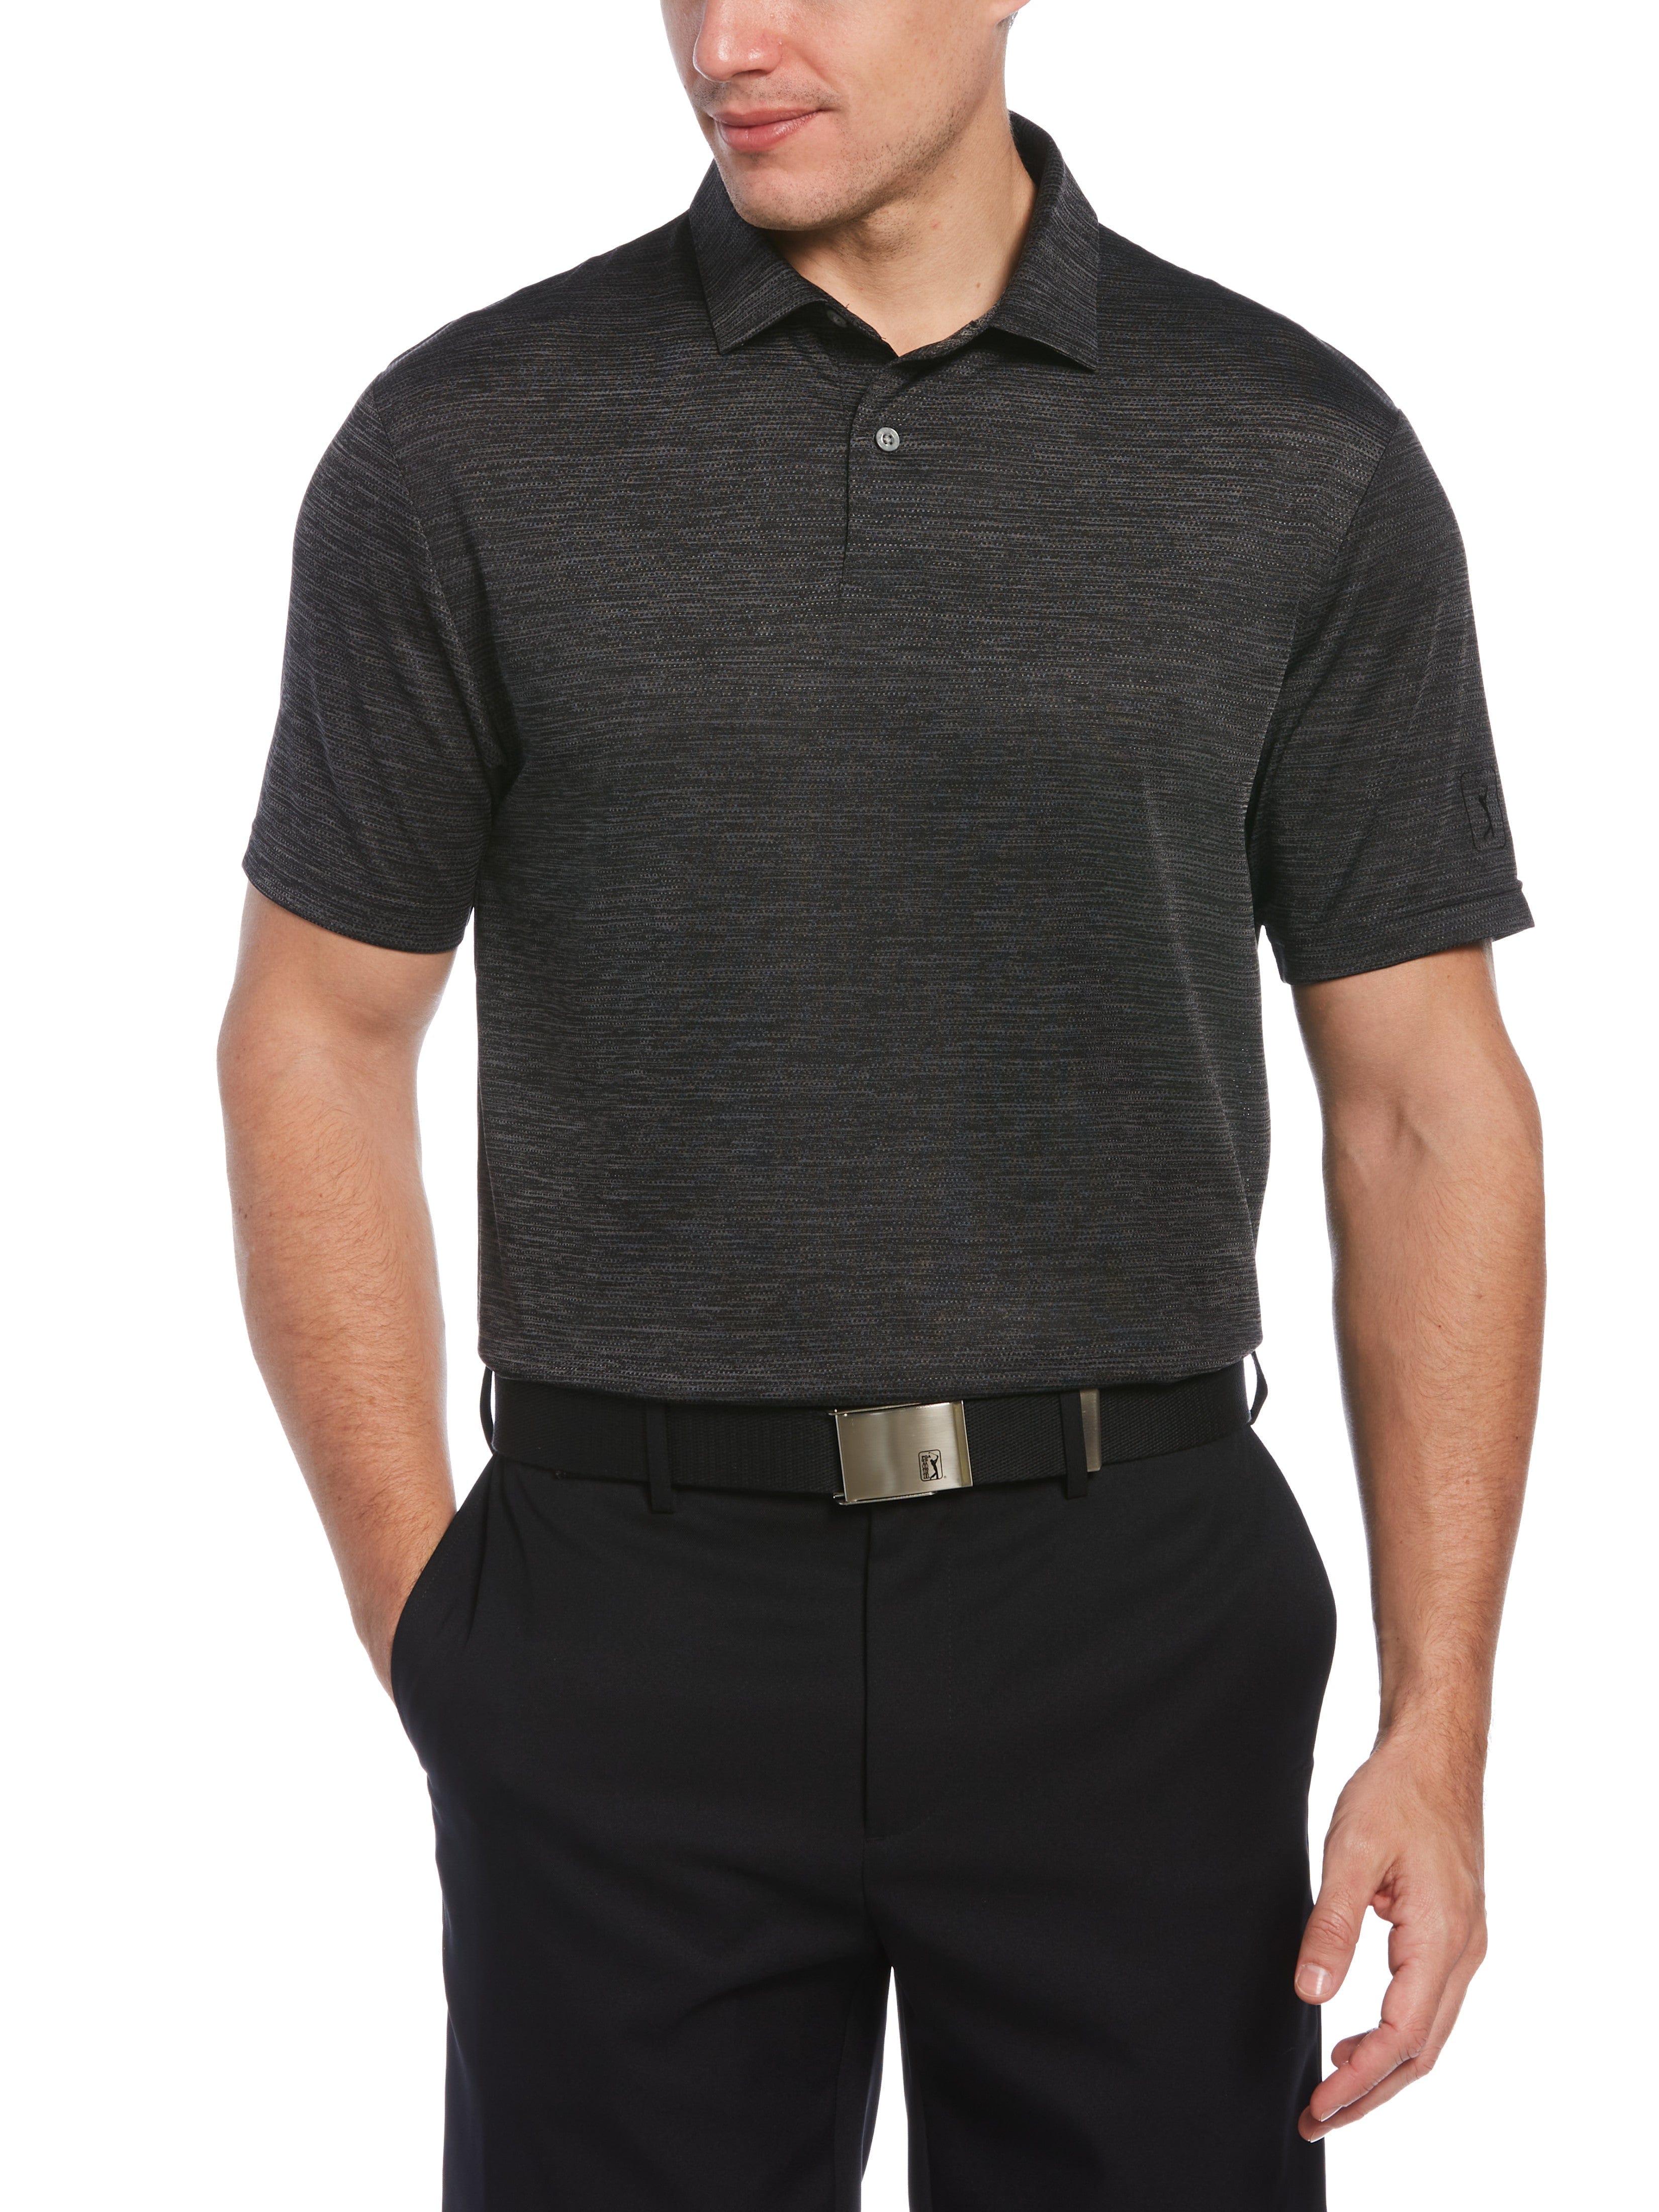 PGA TOUR Apparel Mens Space Dye Texture Golf Polo Shirt, Size Small, Caviar Heather Black, 100% Polyester | Golf Apparel Shop